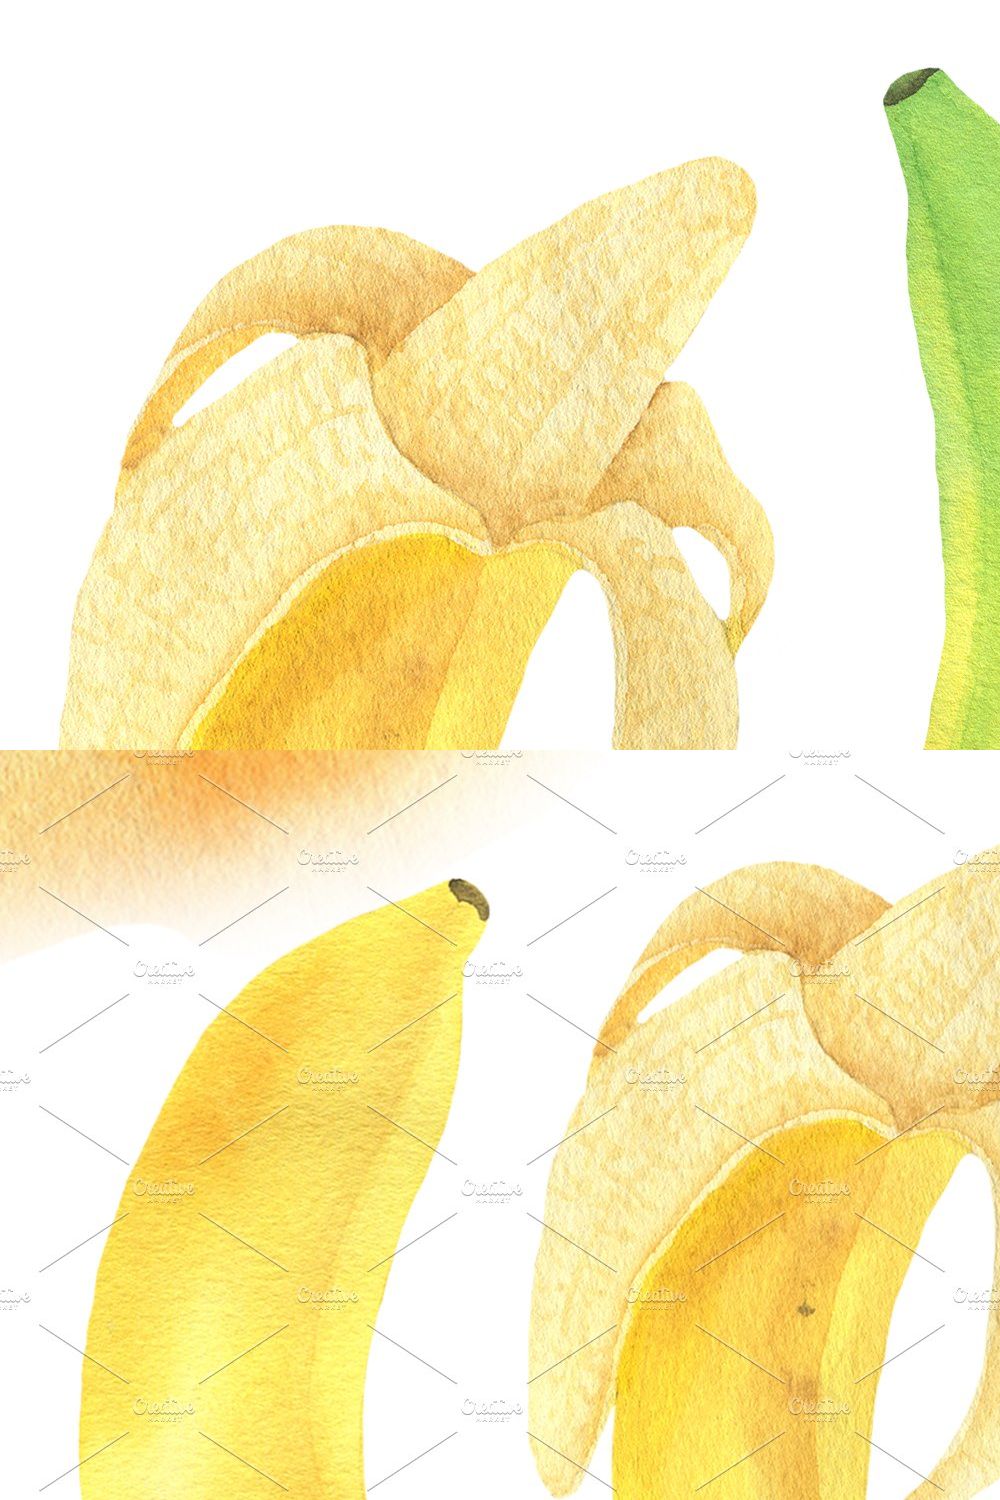 Watercolor Banana pinterest preview image.